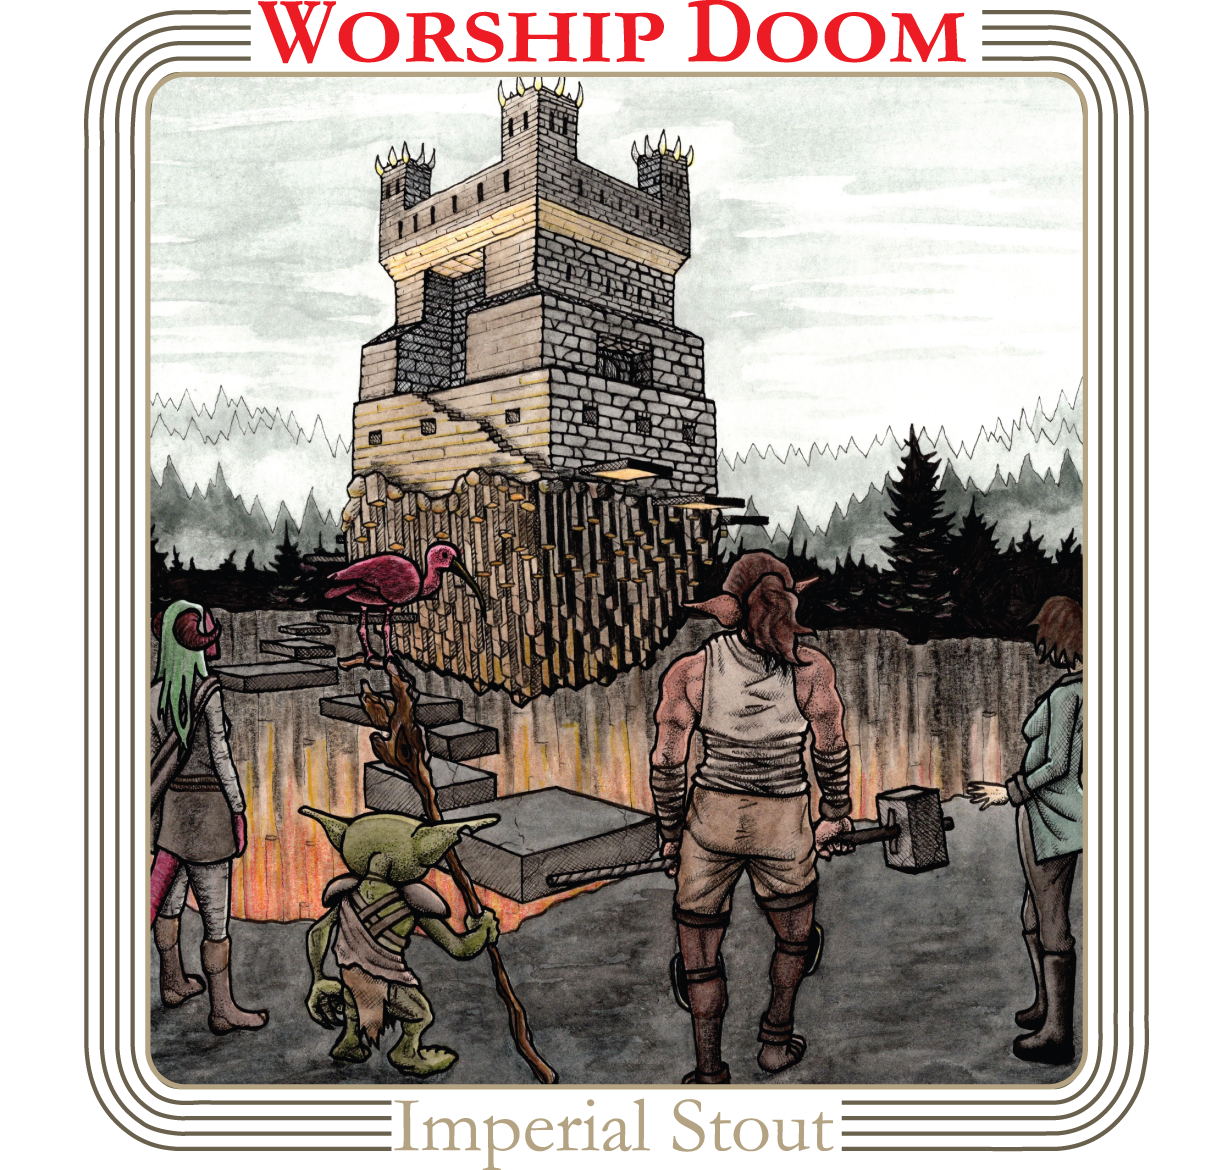 Worship Doom — Four Phantoms Brewing Company